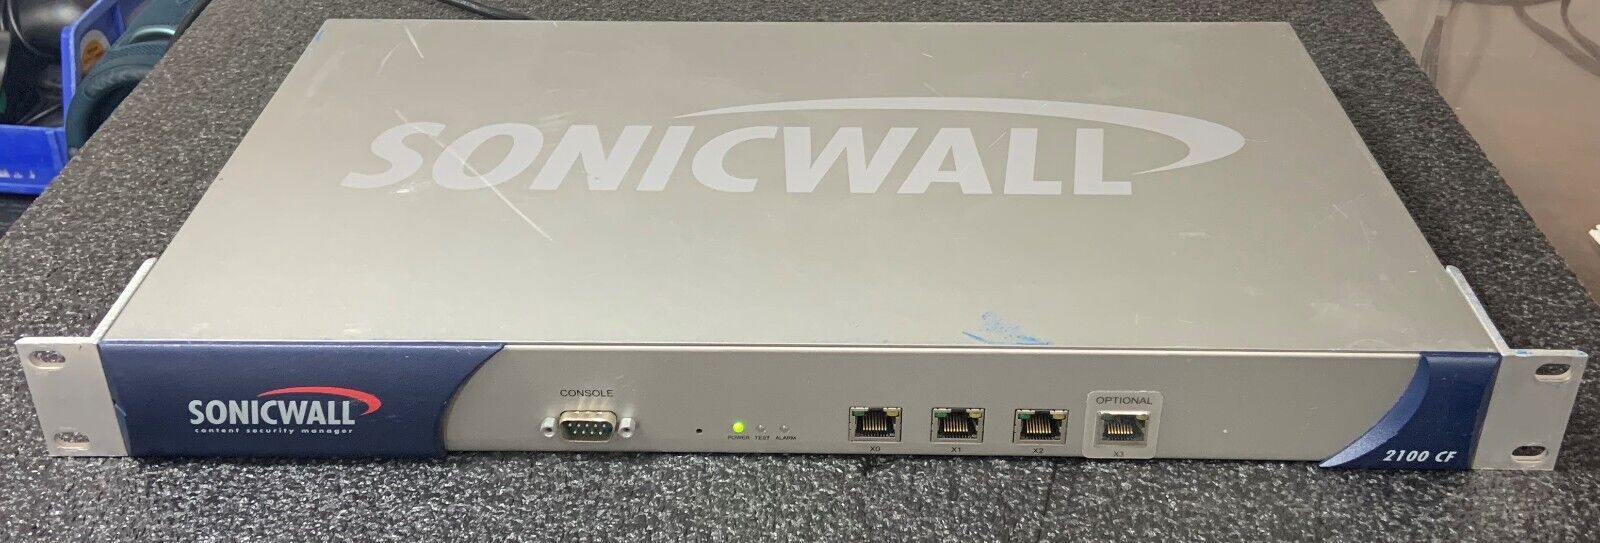 Sonicwall 2100 CF VPN Firewall Network Switch 1RK0A-02A